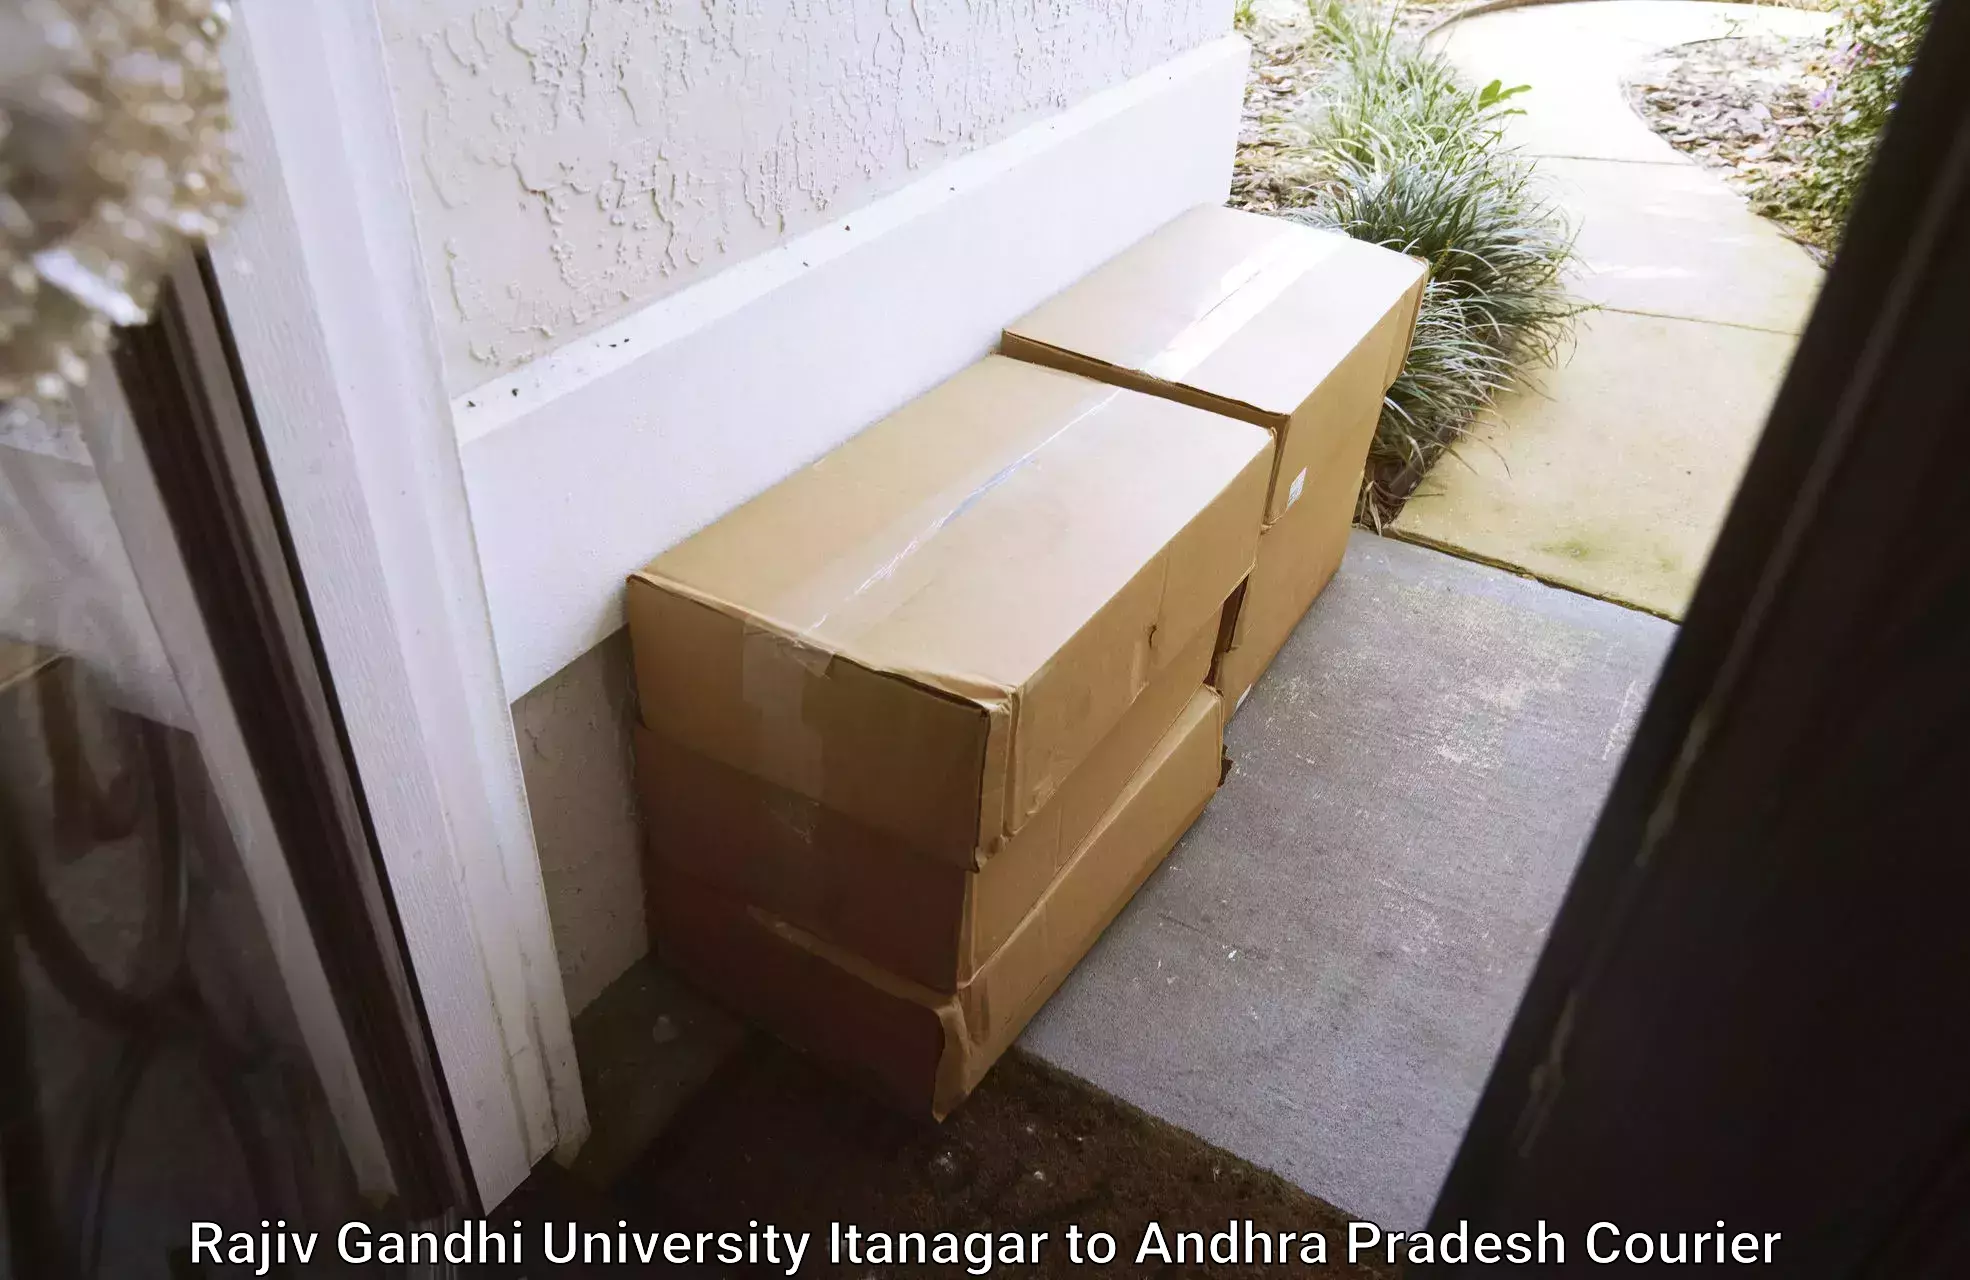 Flexible delivery schedules Rajiv Gandhi University Itanagar to Jinnuru